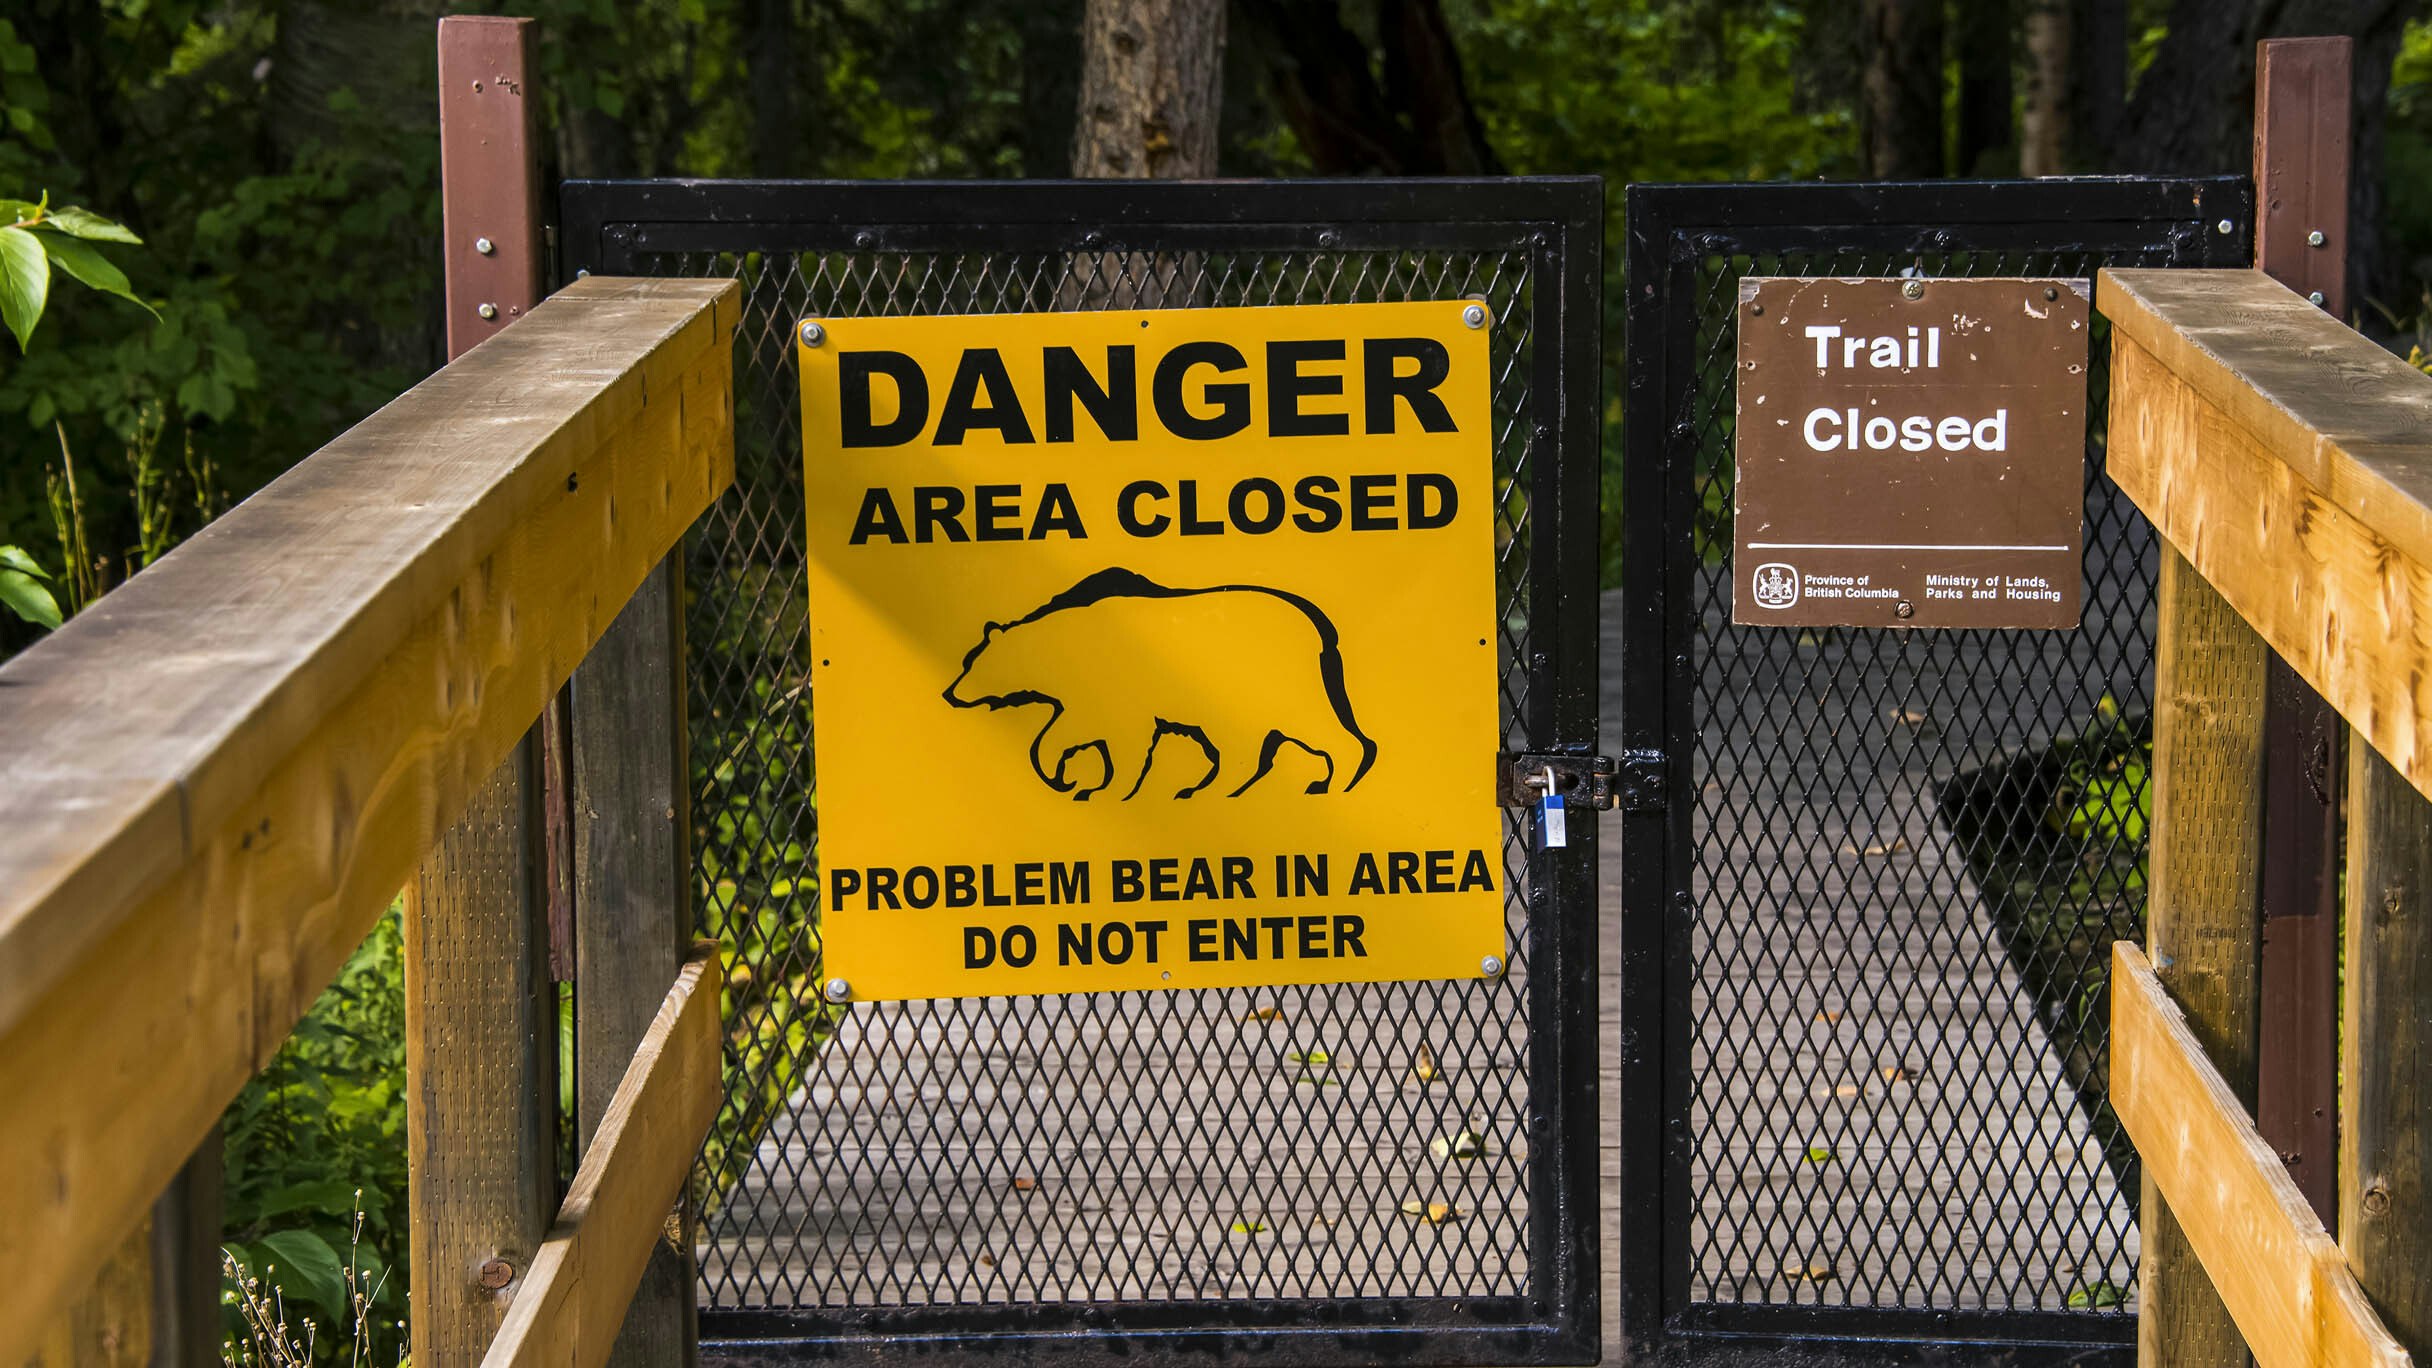 Bear warning sign